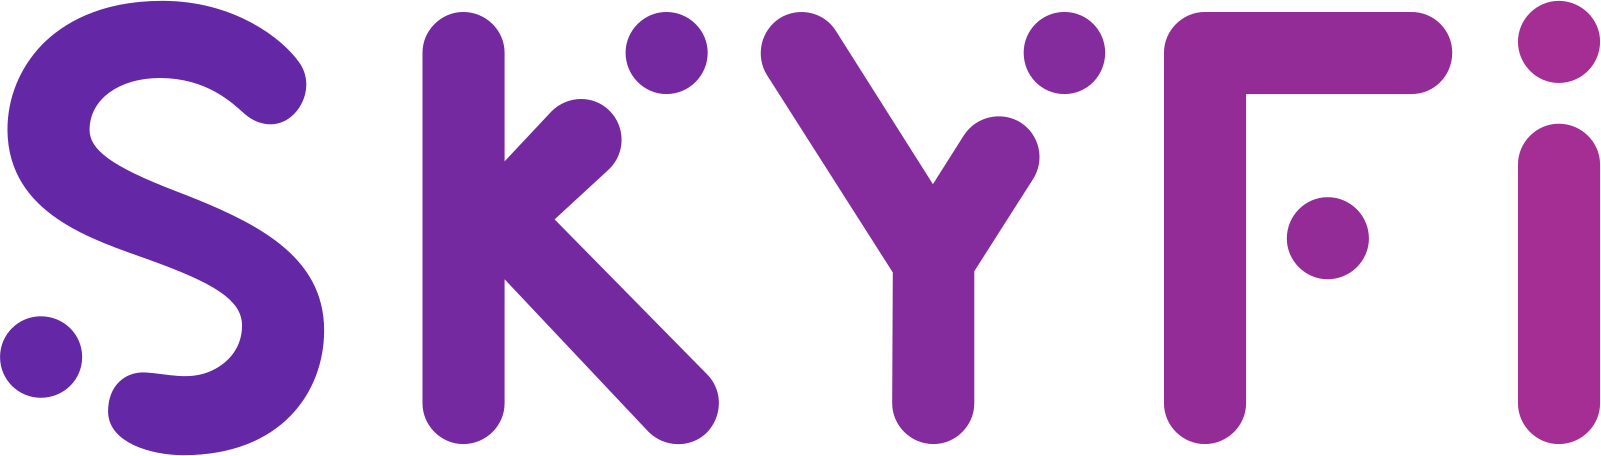 Skyfi-logo-border